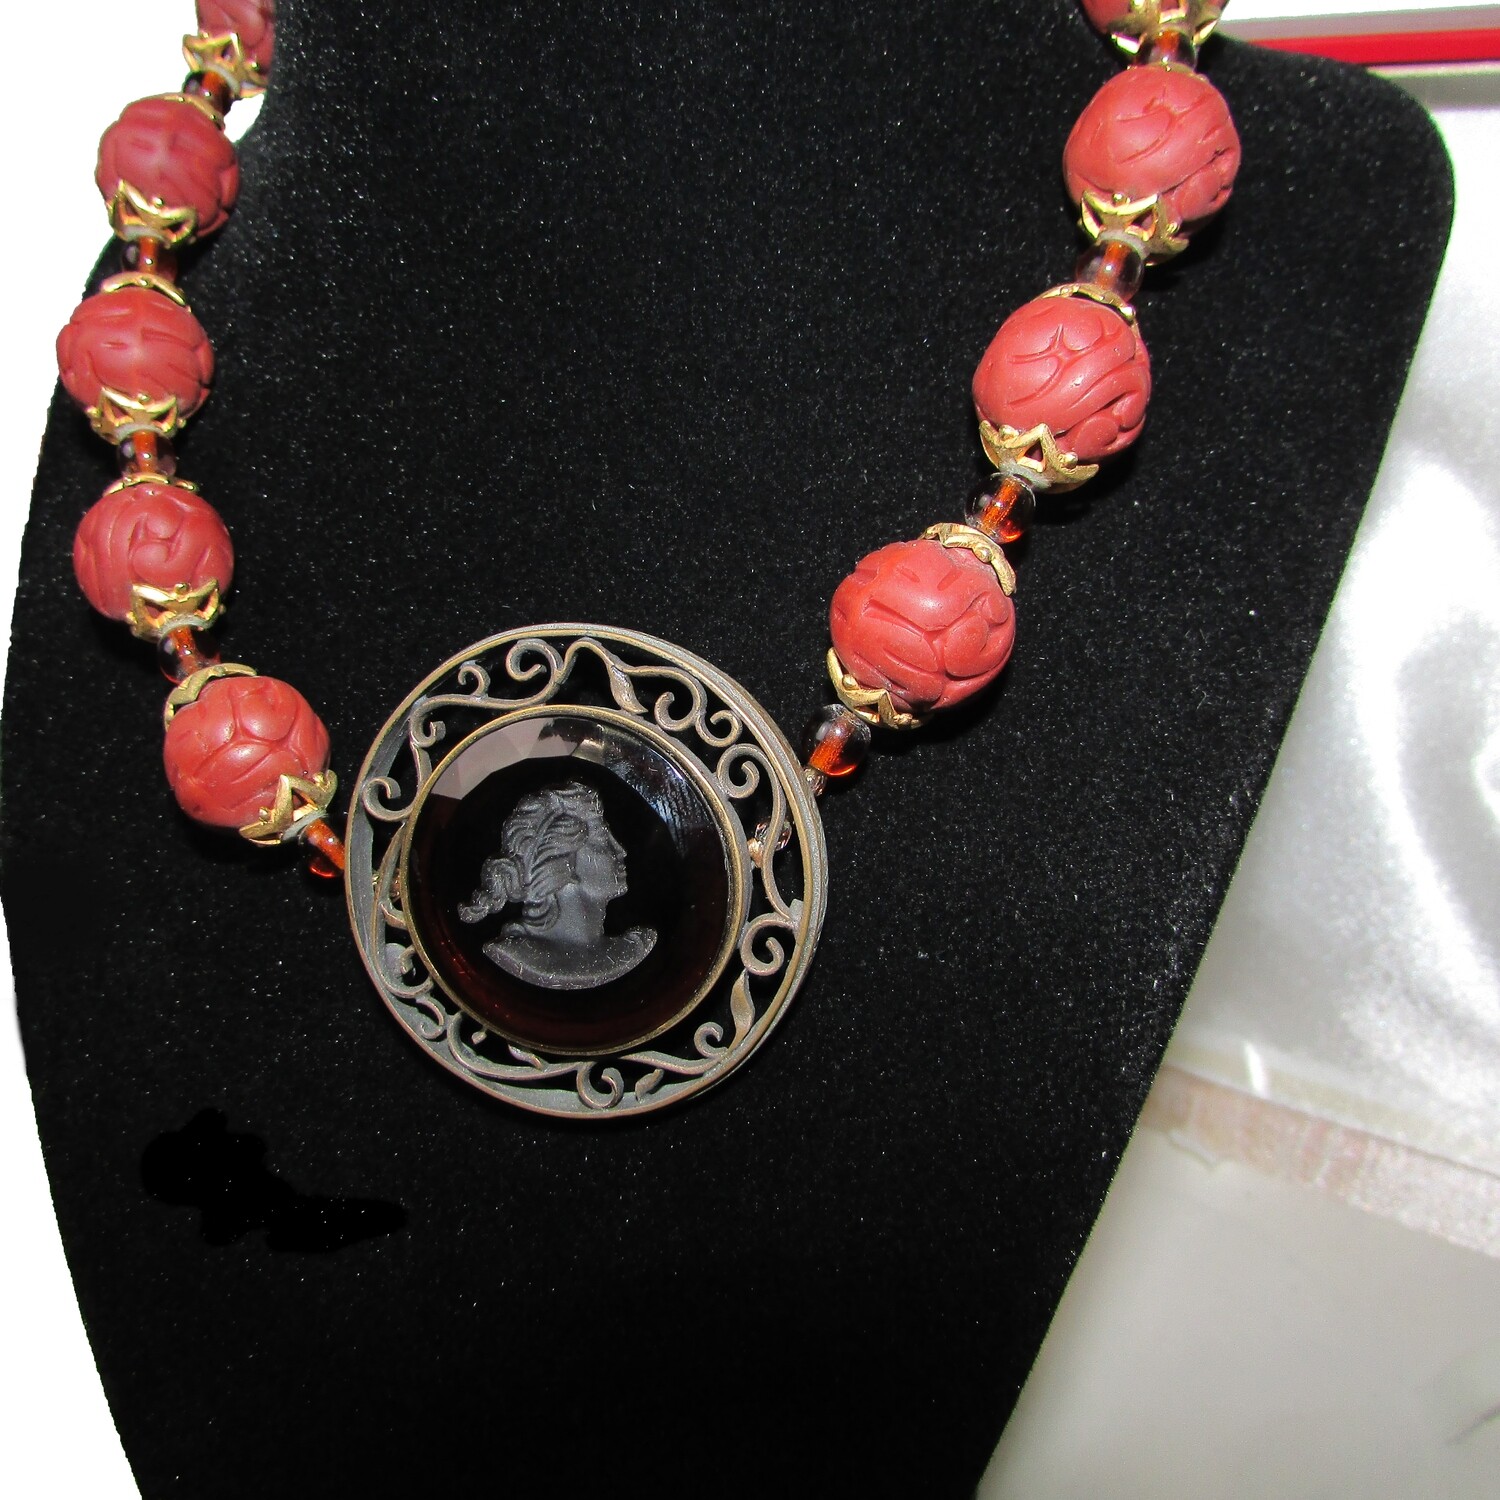 Extasia's Lady Red Intaglio Marsala German Glass Pendant in Bronze Metal with Cinnabar Beads Choker c. 1990's